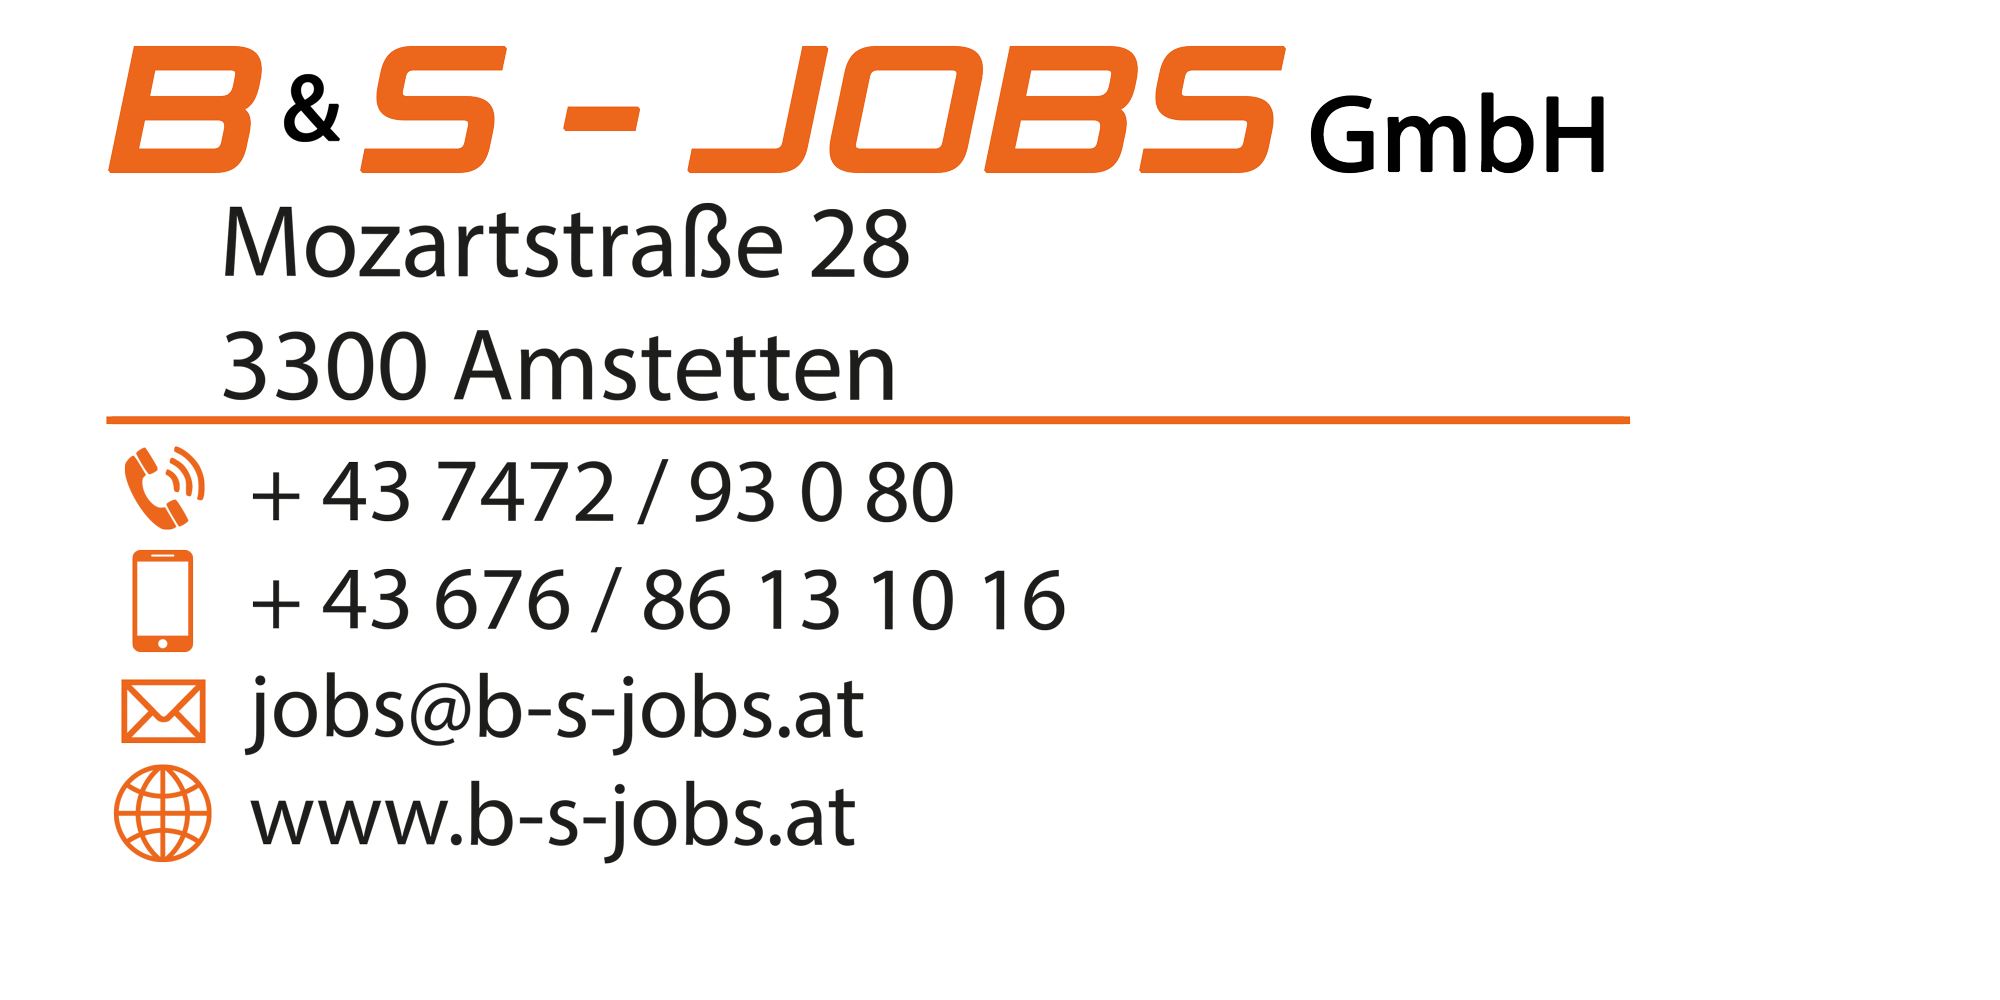 B&S - Jobs GmbH